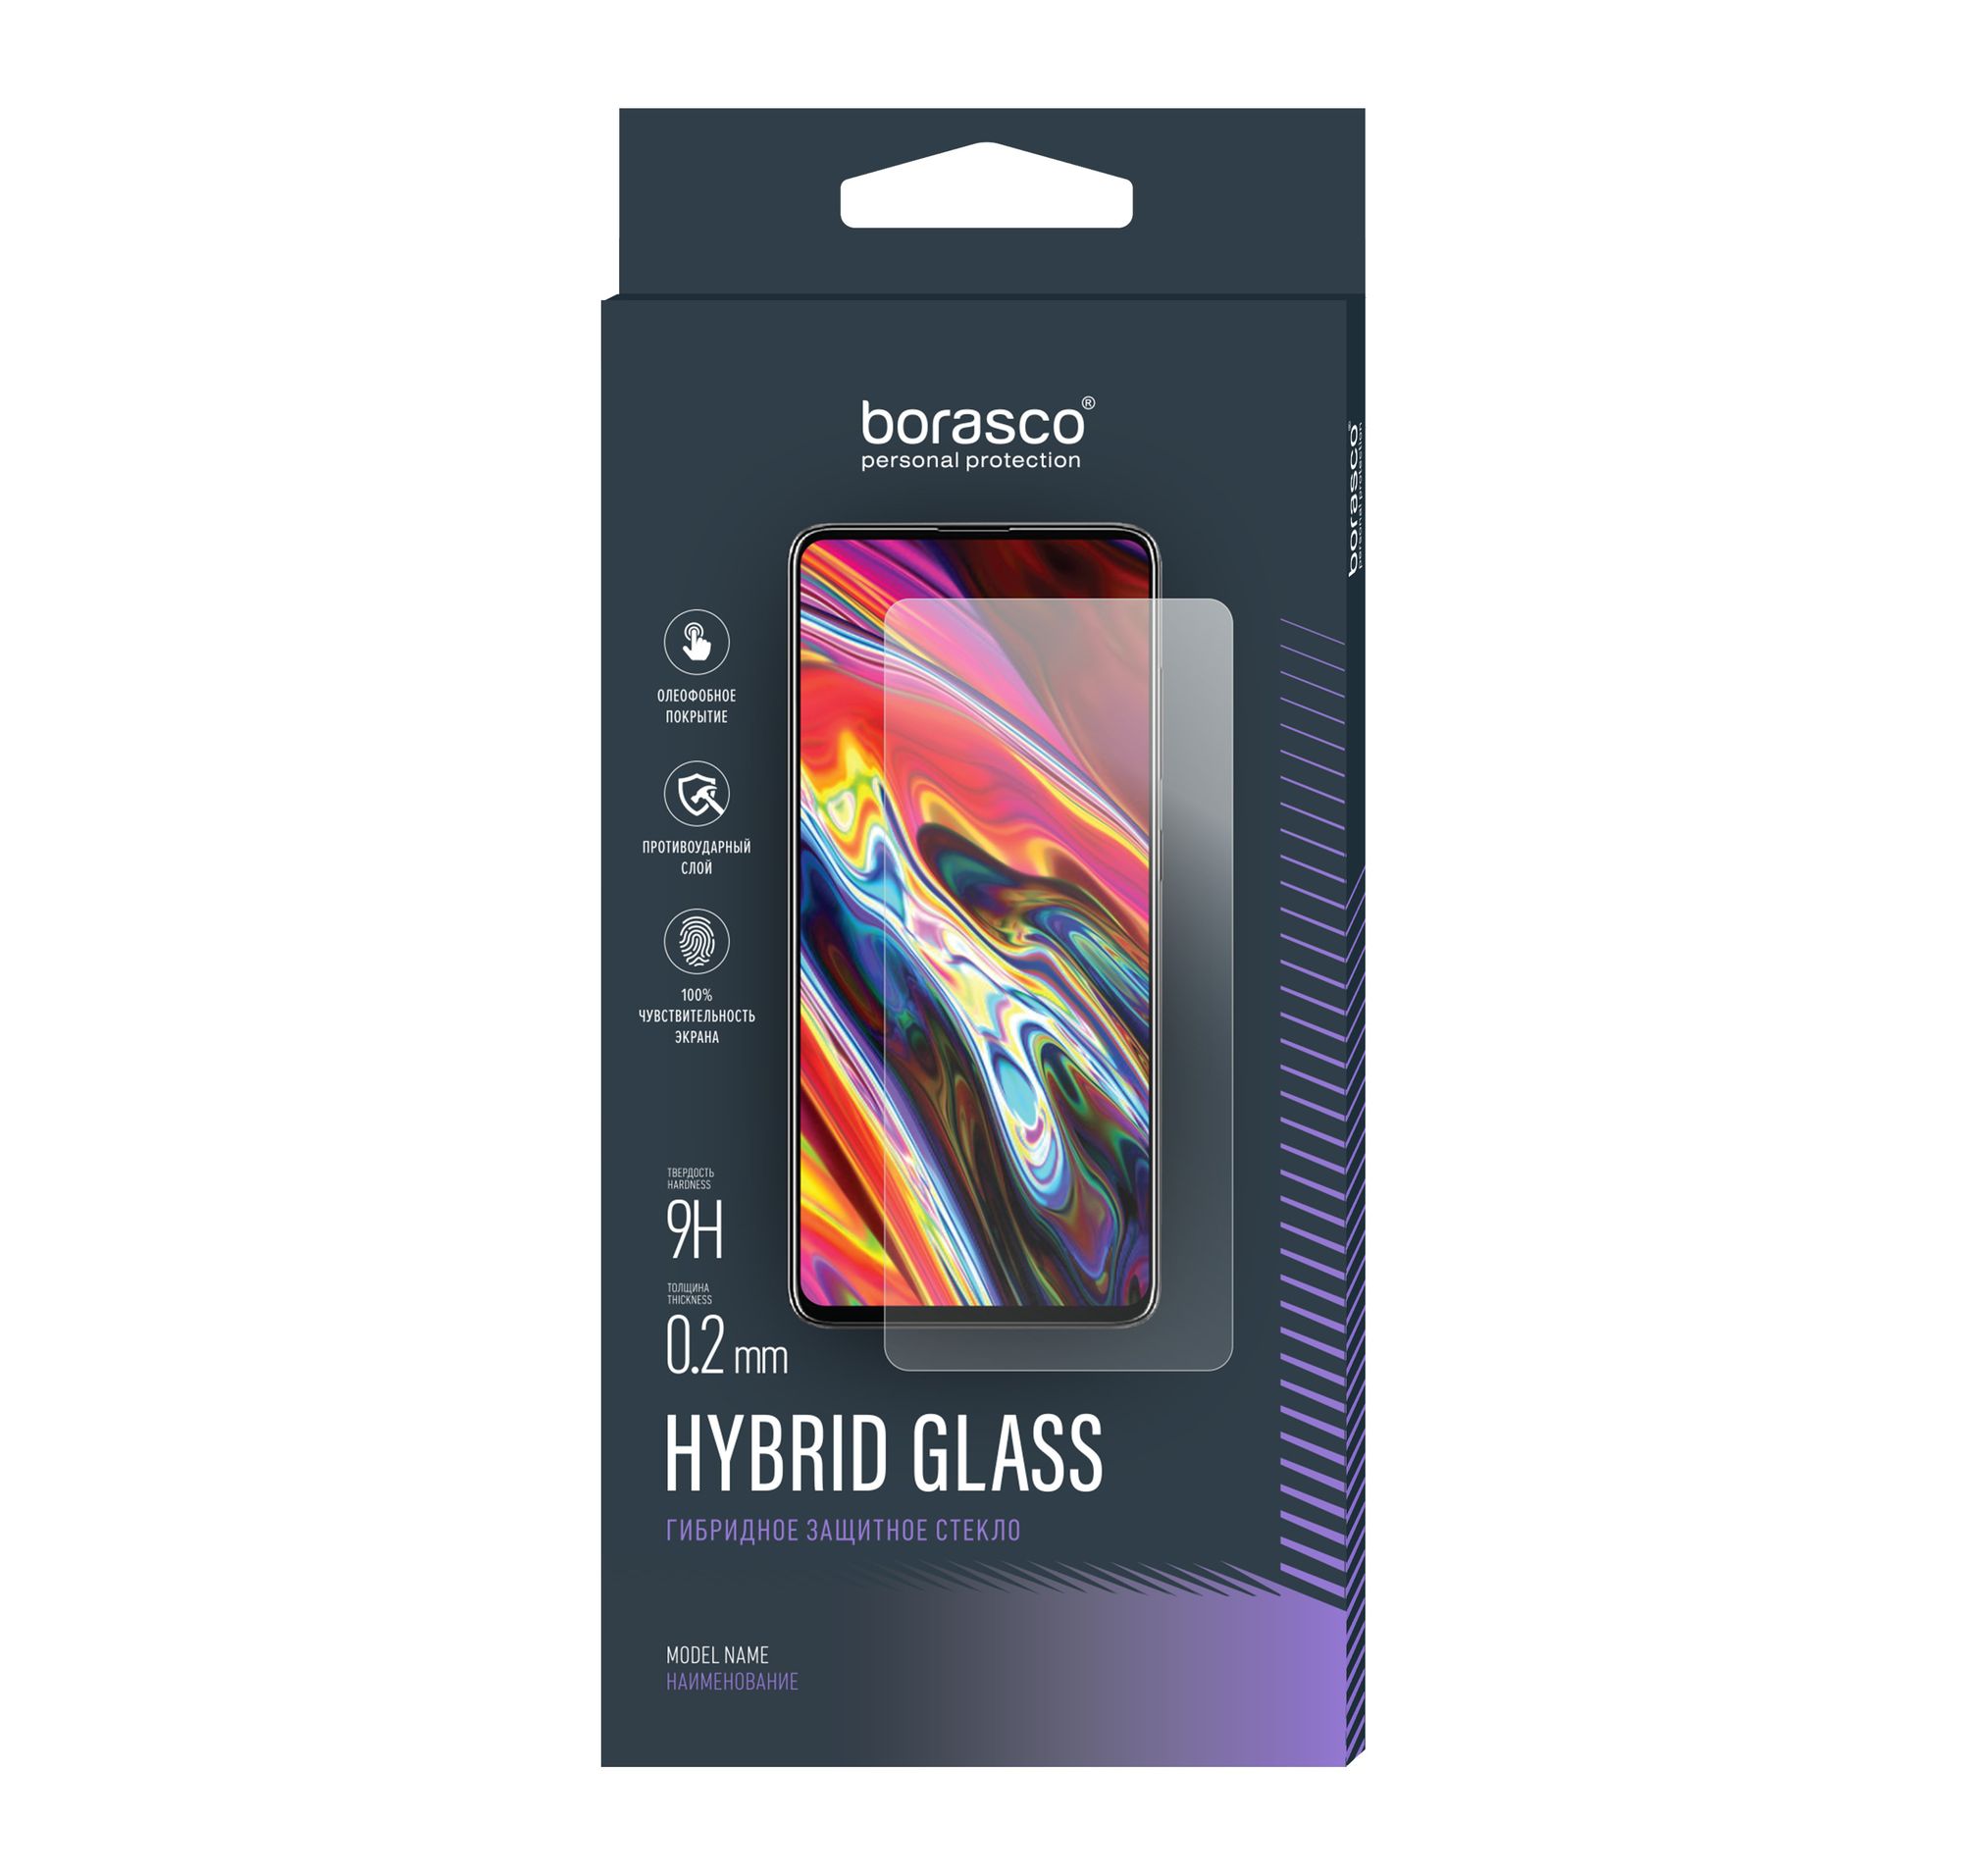 Стекло защитное Hybrid Glass VSP 0,26 мм для LG K8 цена и фото